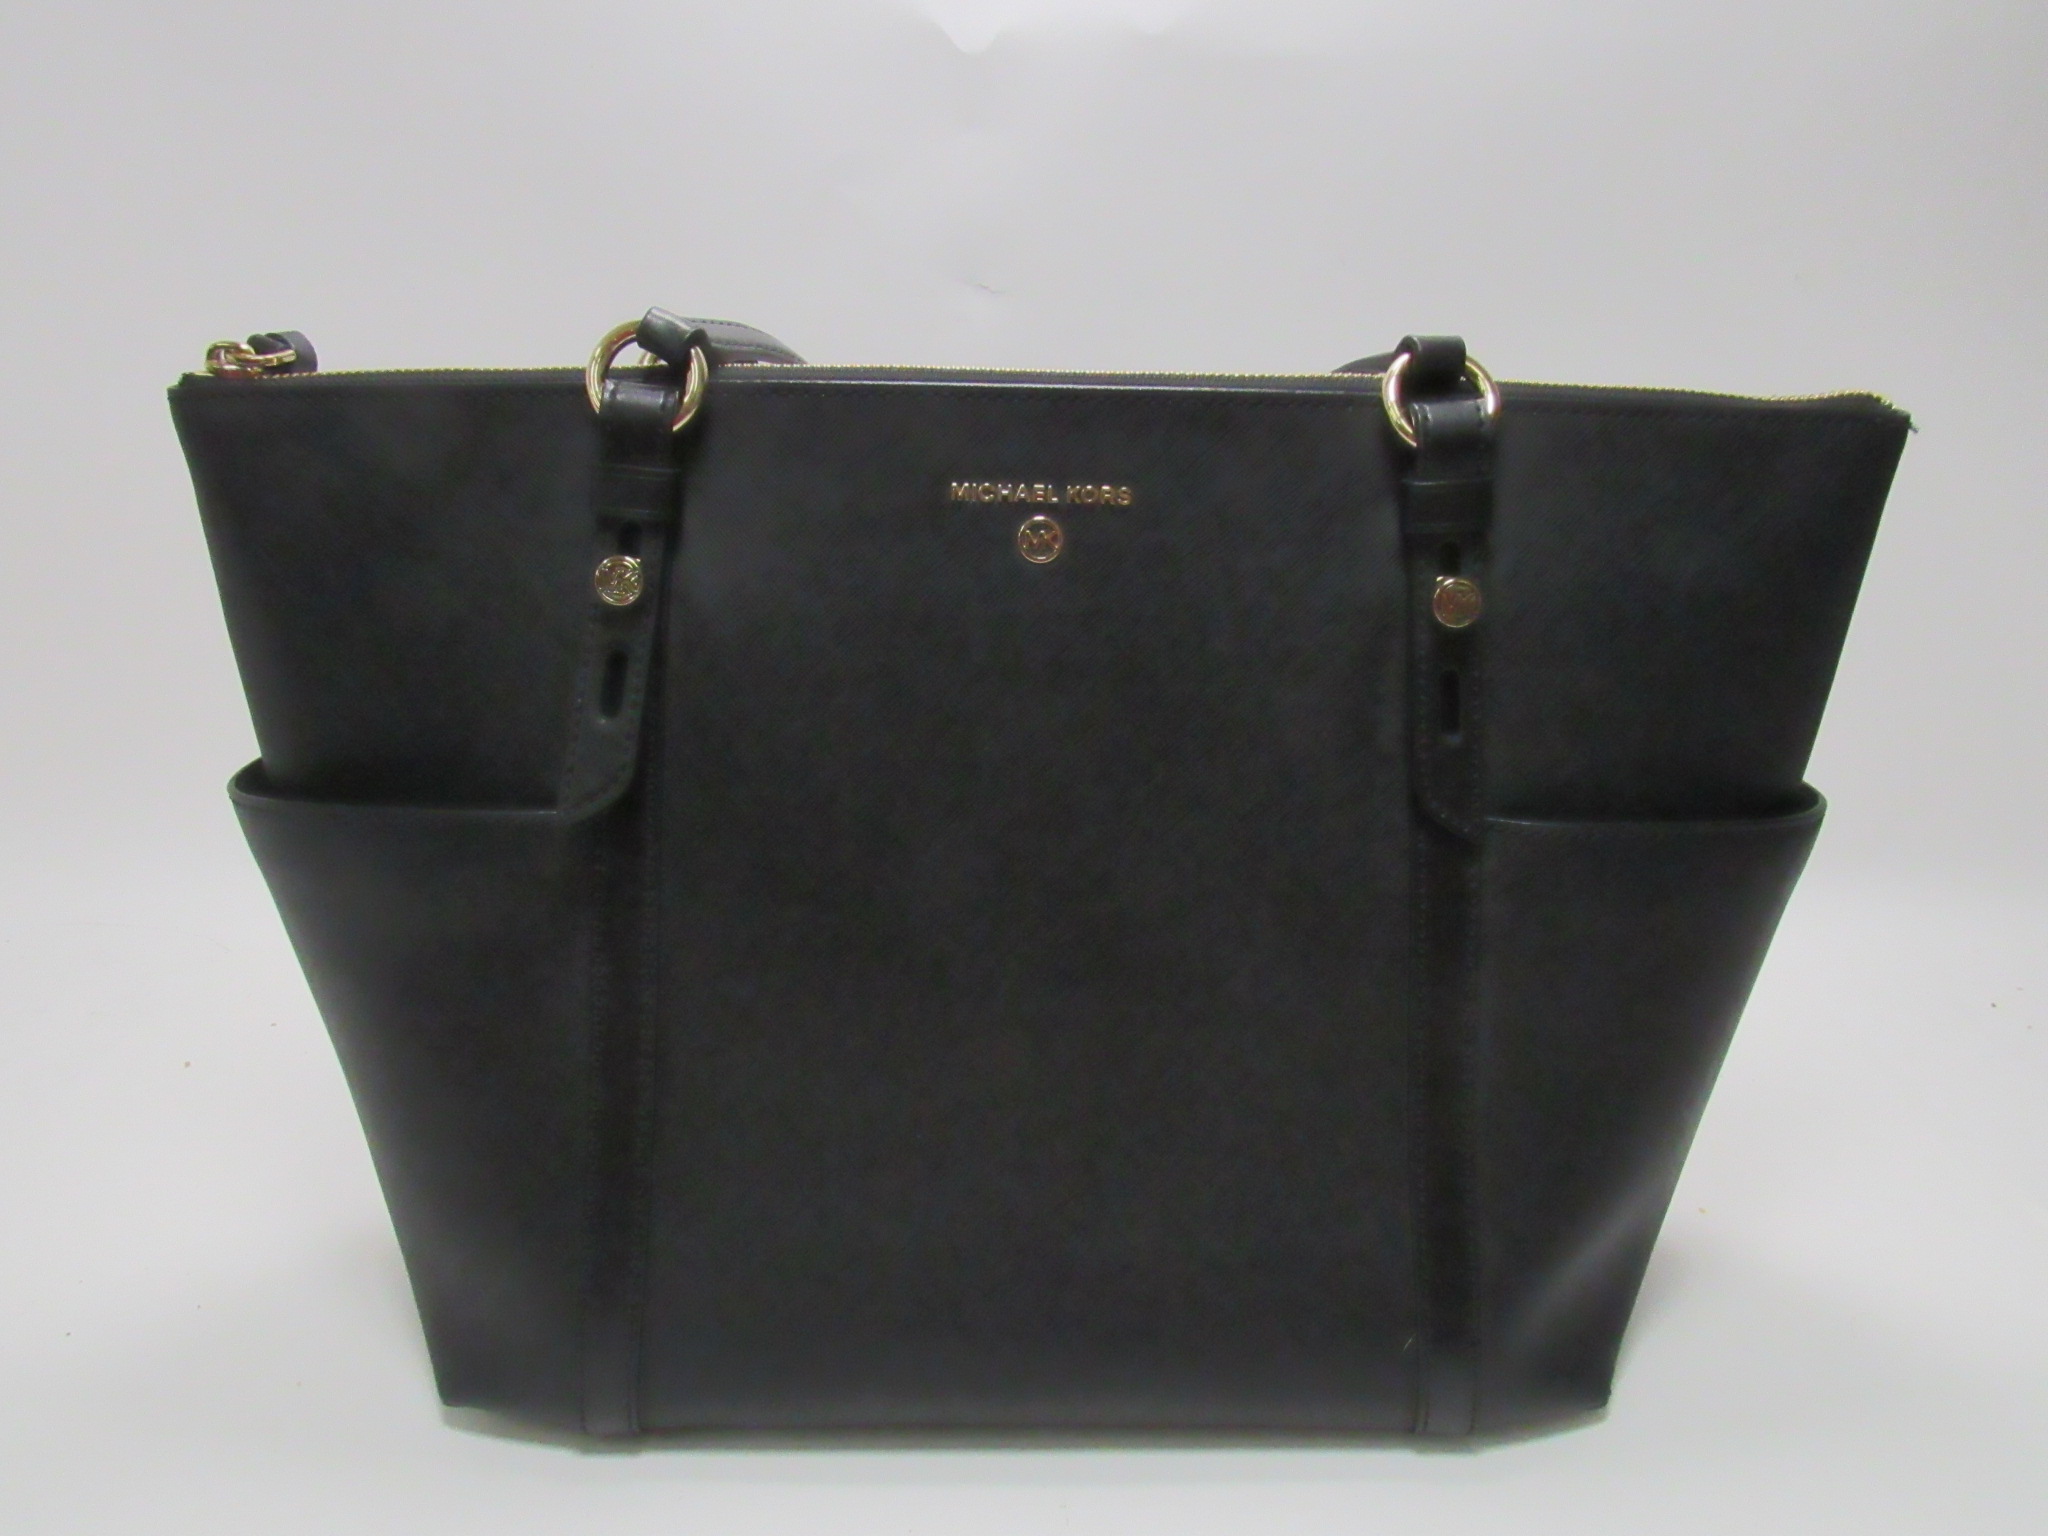 Buy Michael Kors Tote Bag with Branding, Black Color Women